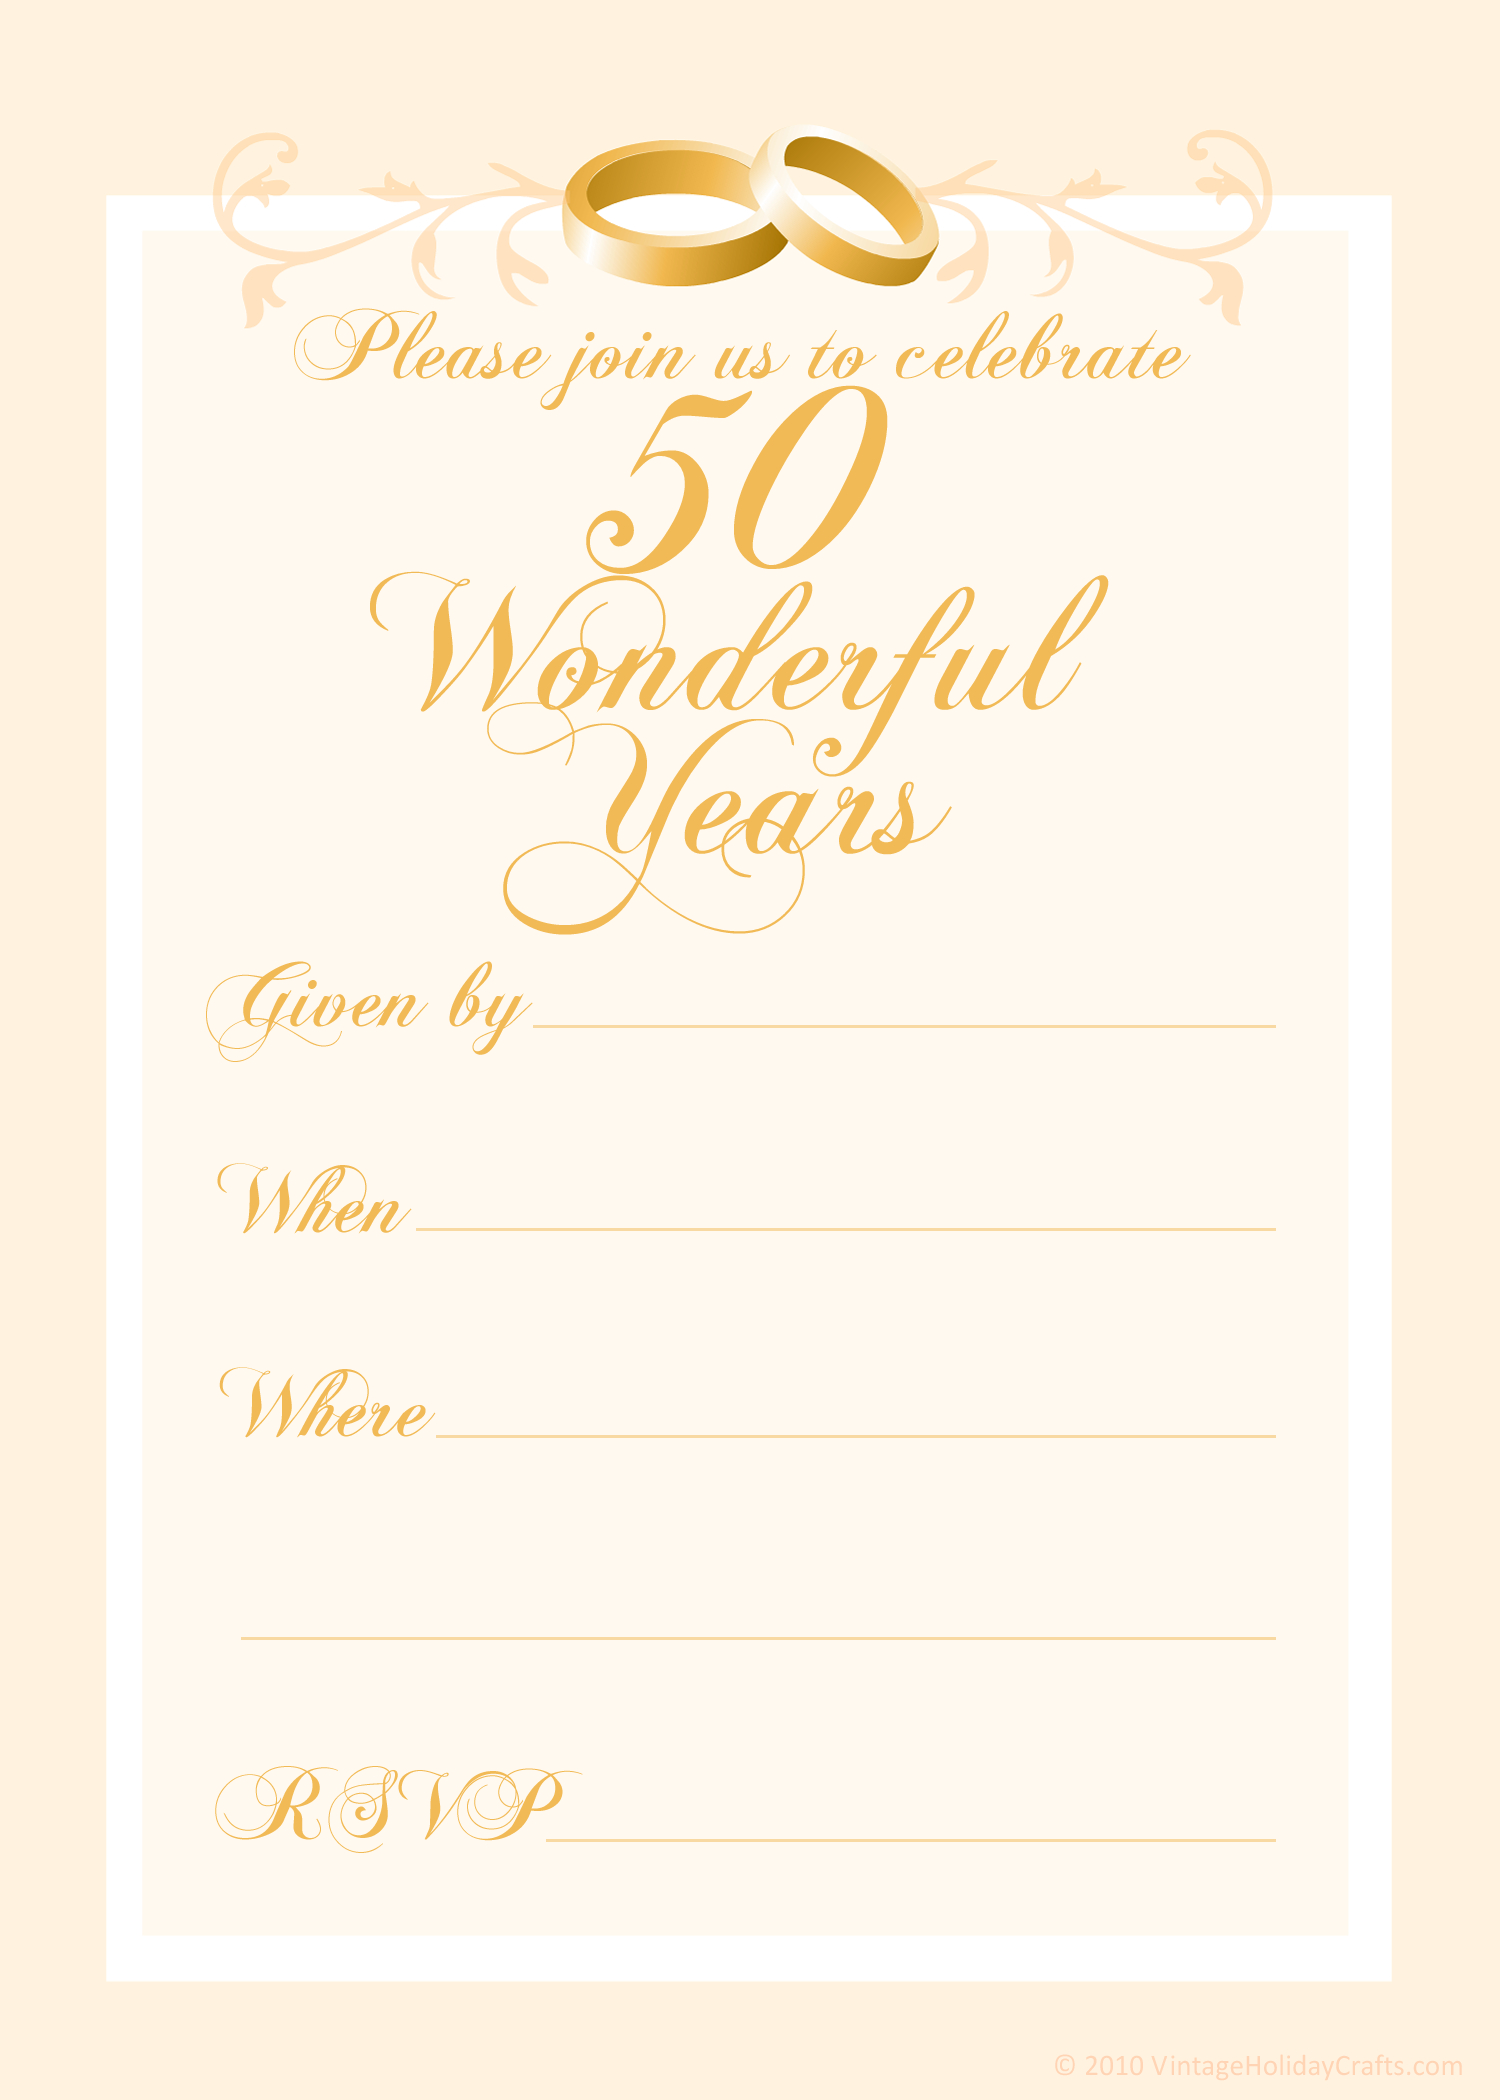 Free 50th Wedding Anniversary Invitations Templates 50th inside measurements 1500 X 2100